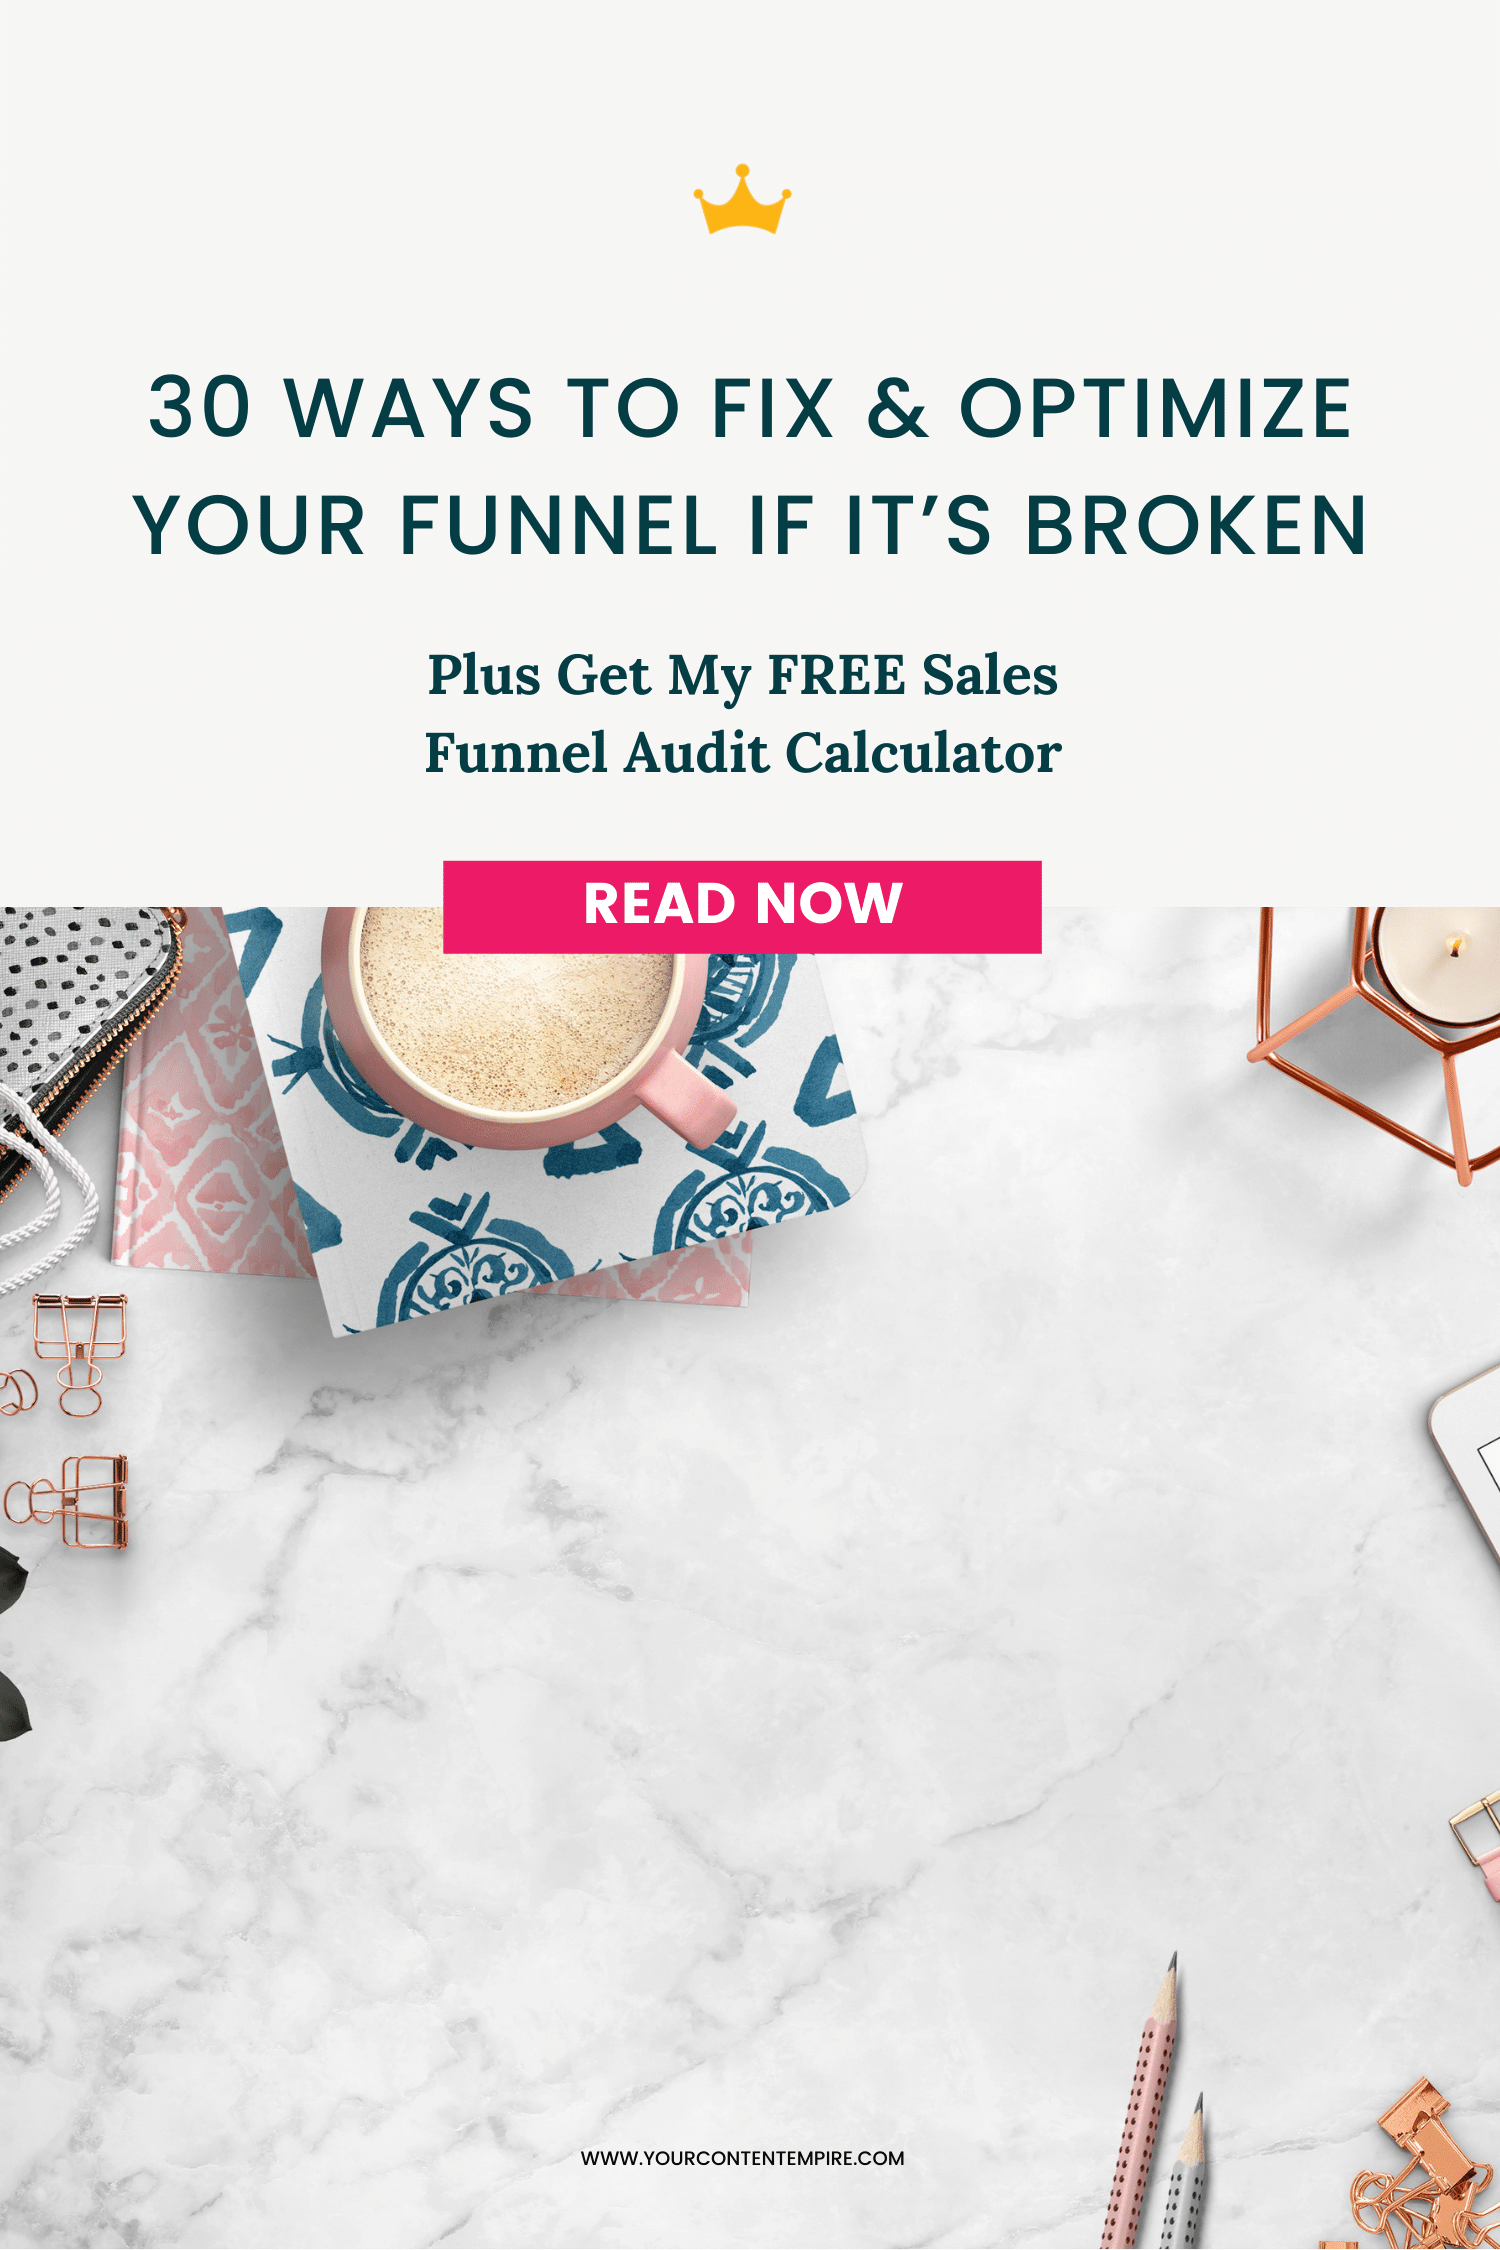 30 Ways to Fix & Optimize Your Funnel If It’s Broken